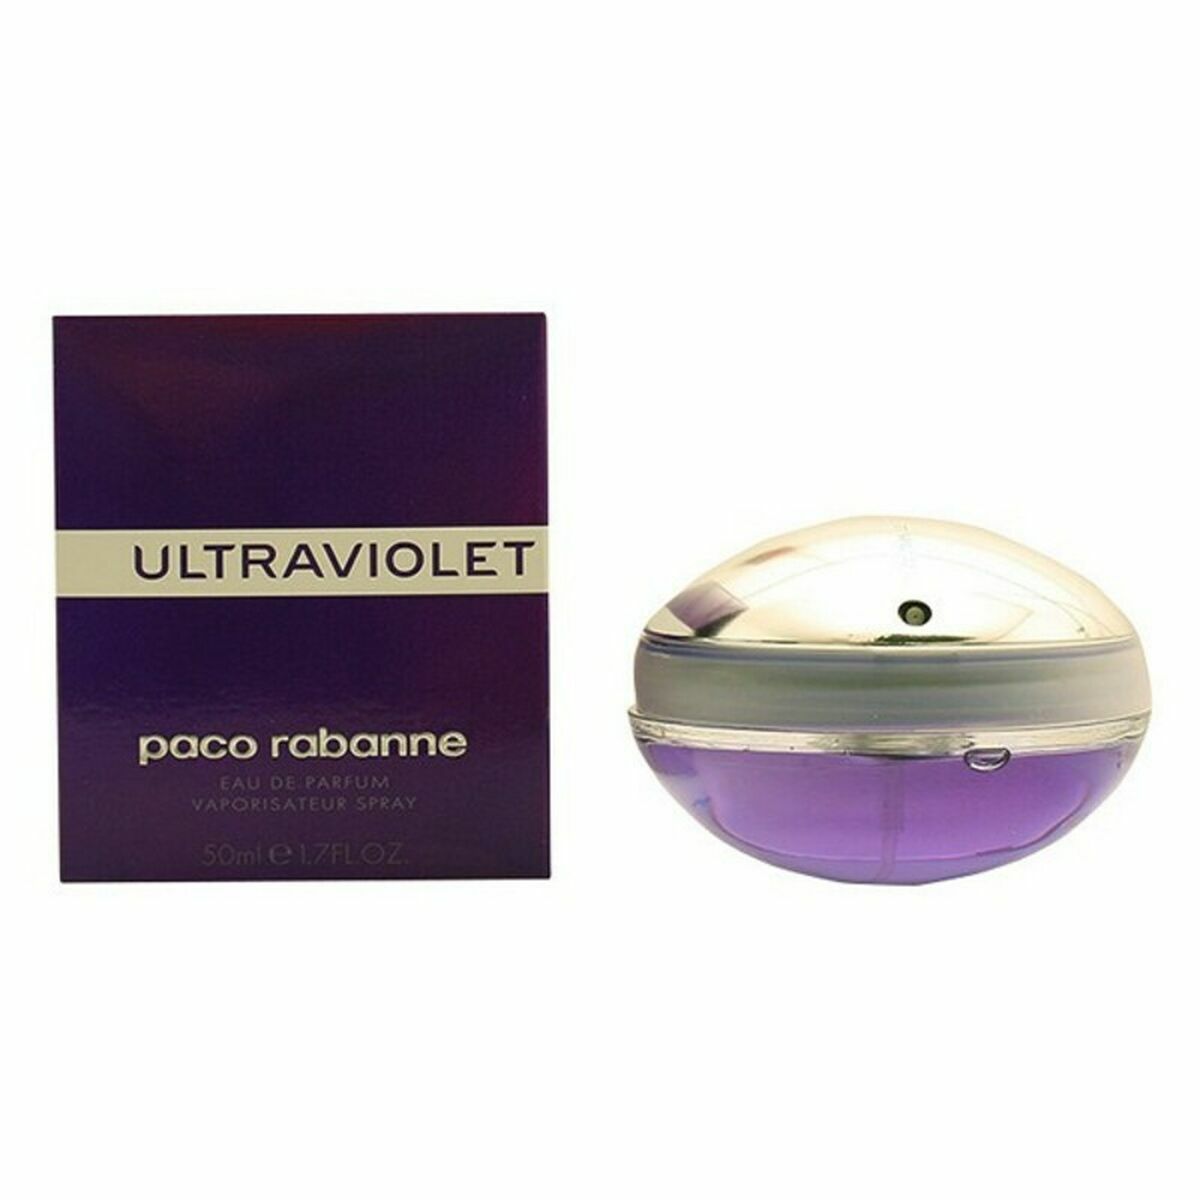 Kaufe Ultraviolet Paco Rabanne EDP - Damen bei AWK Flagship um € 68.00